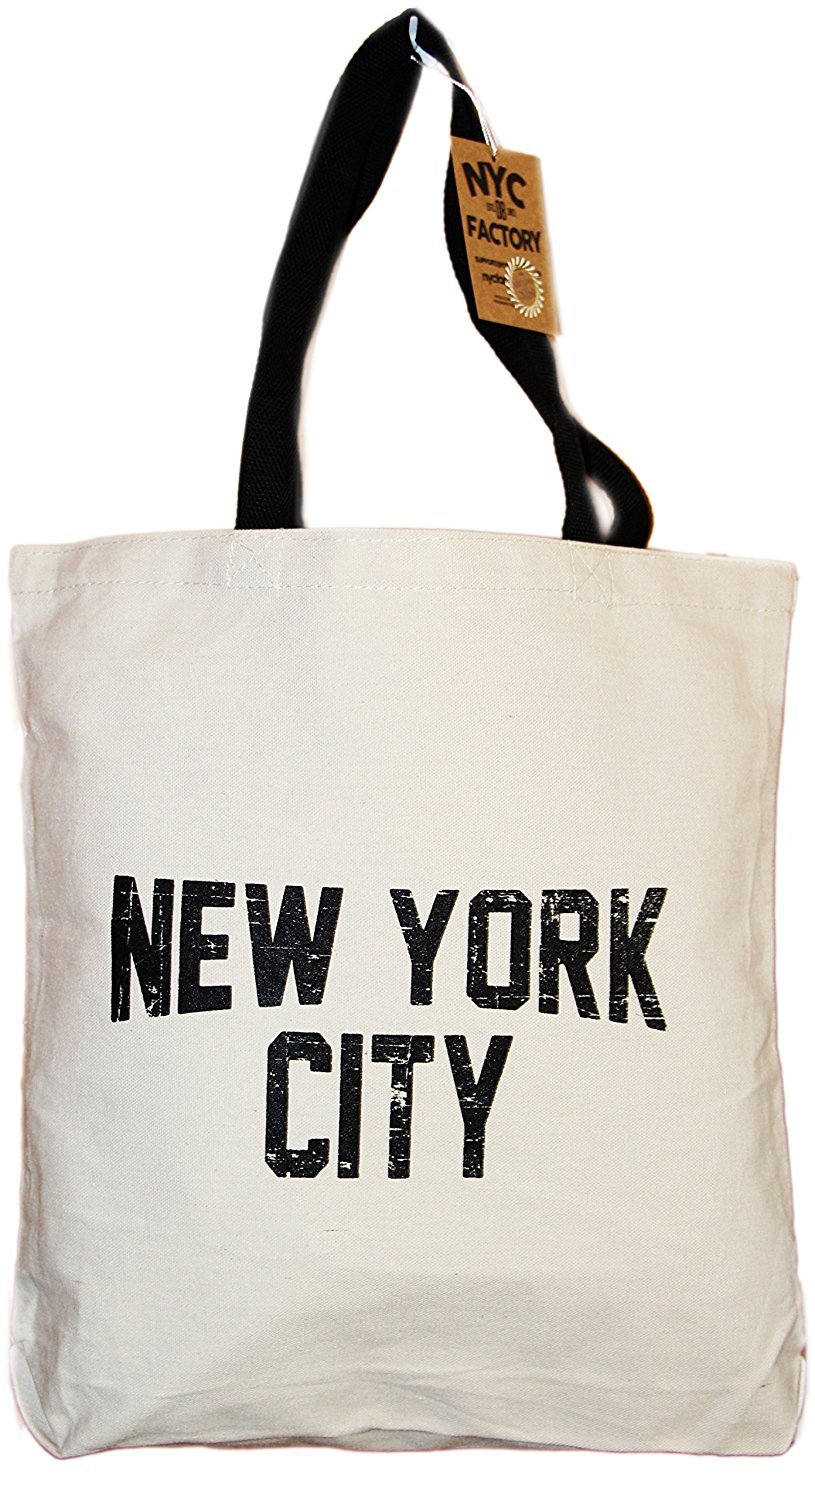 New York City Tote Bag Cotton Canvas (Distressed Design, Natural / Black Straps)